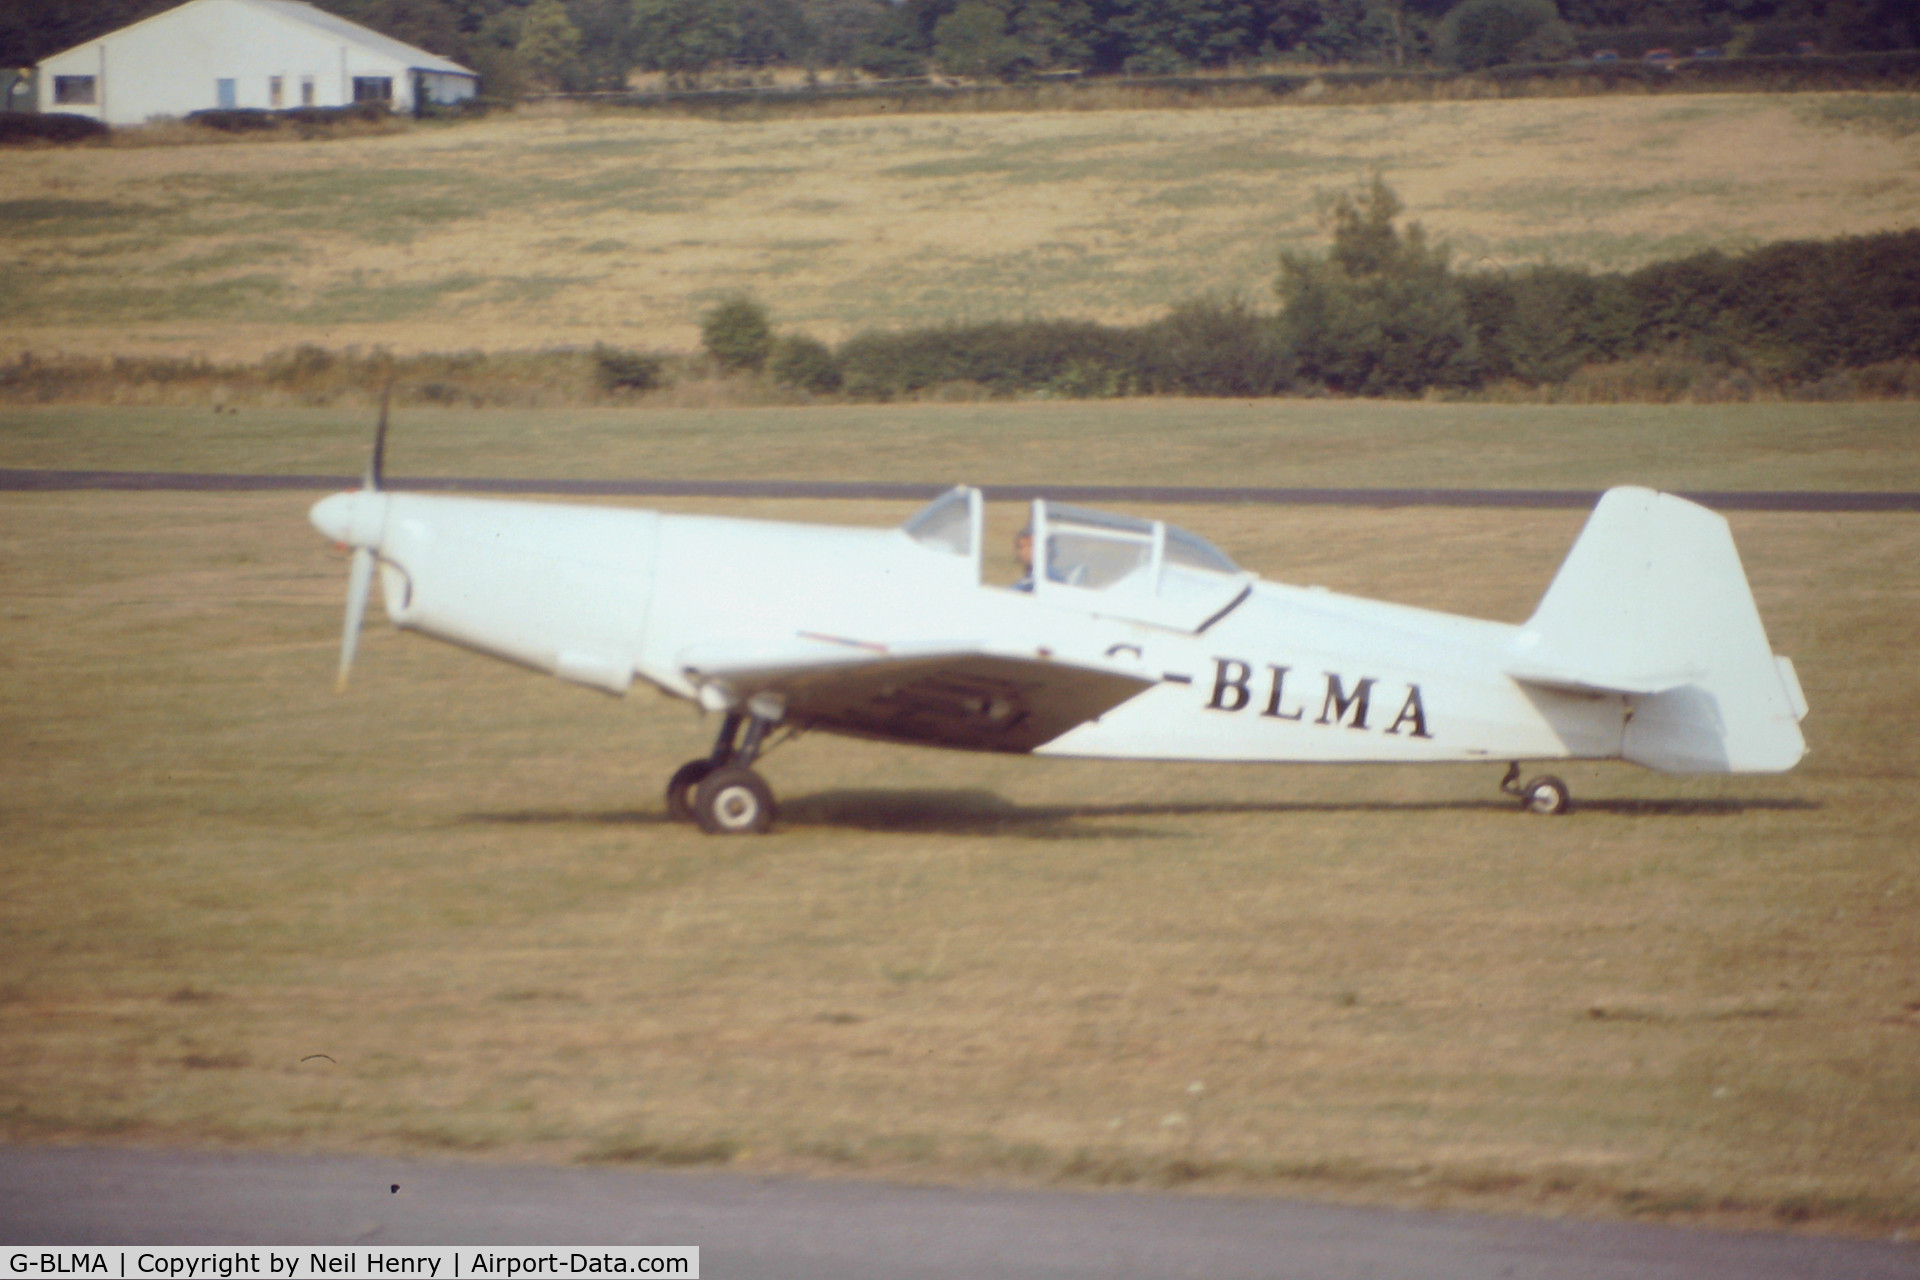 G-BLMA, 1967 Zlin Z-526 Trener Master C/N 922, Scanned from original slide taken at Redhill, Surrey, UK. in July 1989